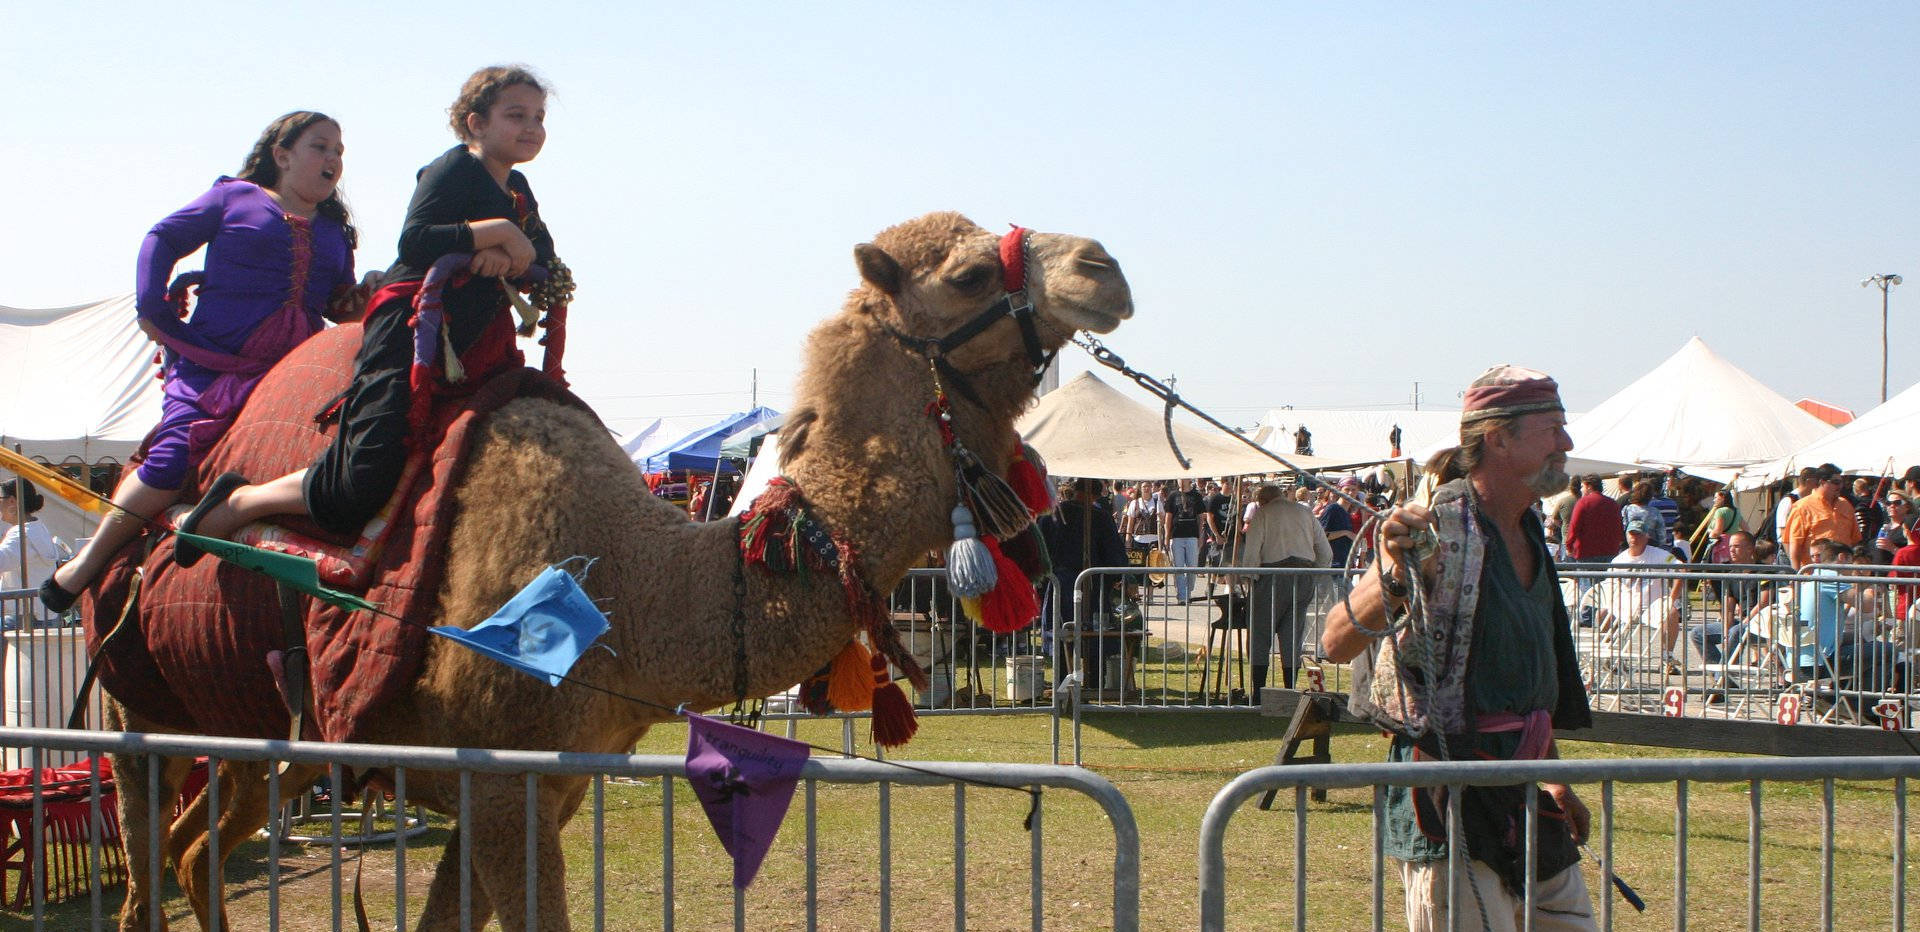 camel rides image